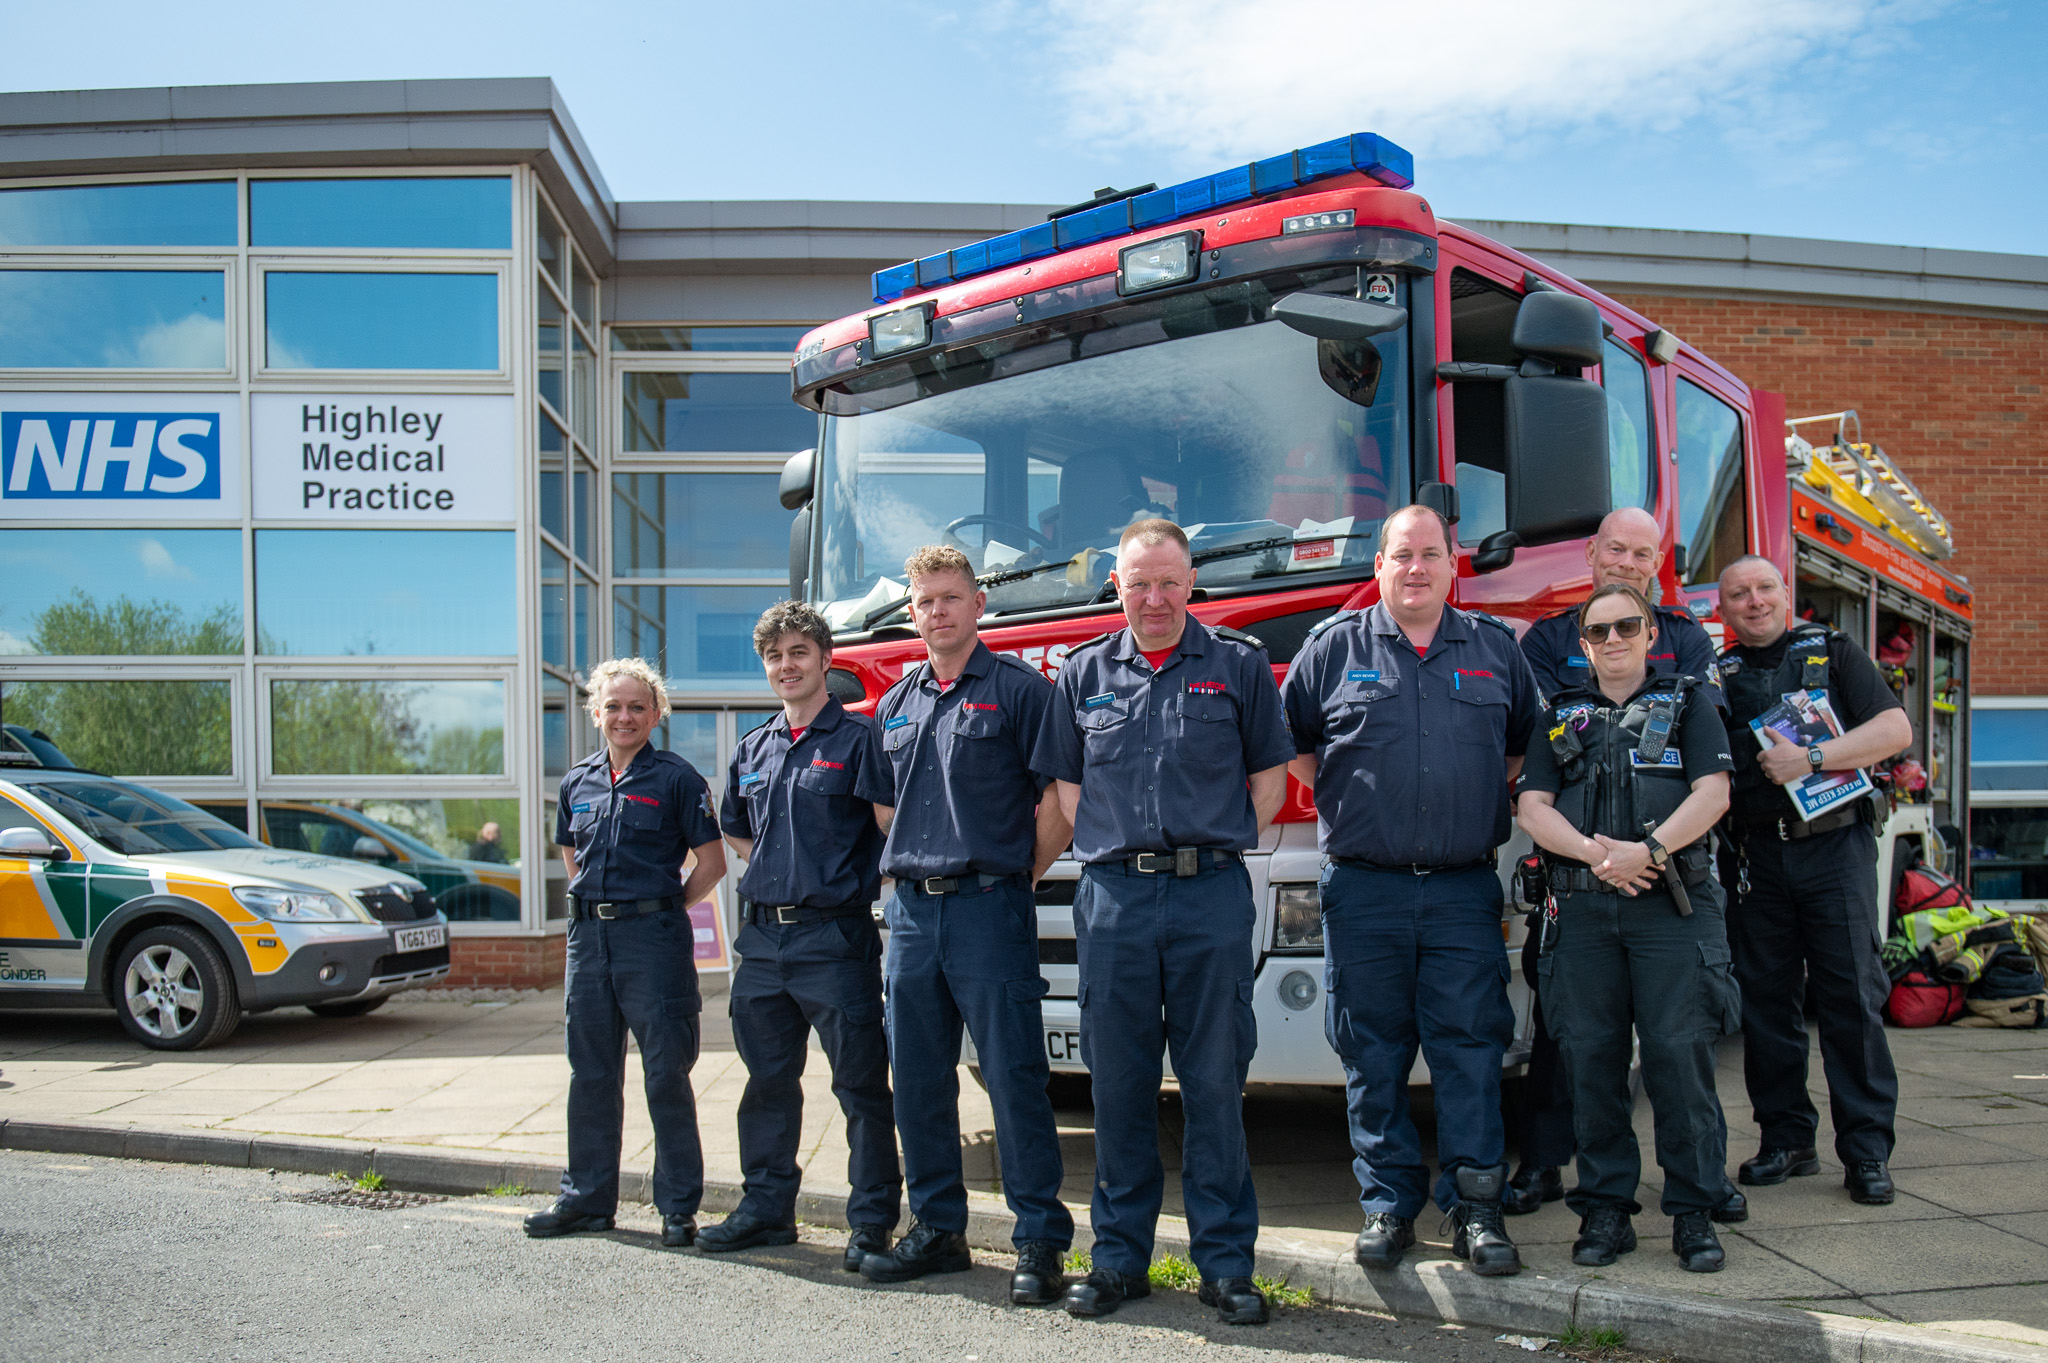 Shropshire Fire and rescue